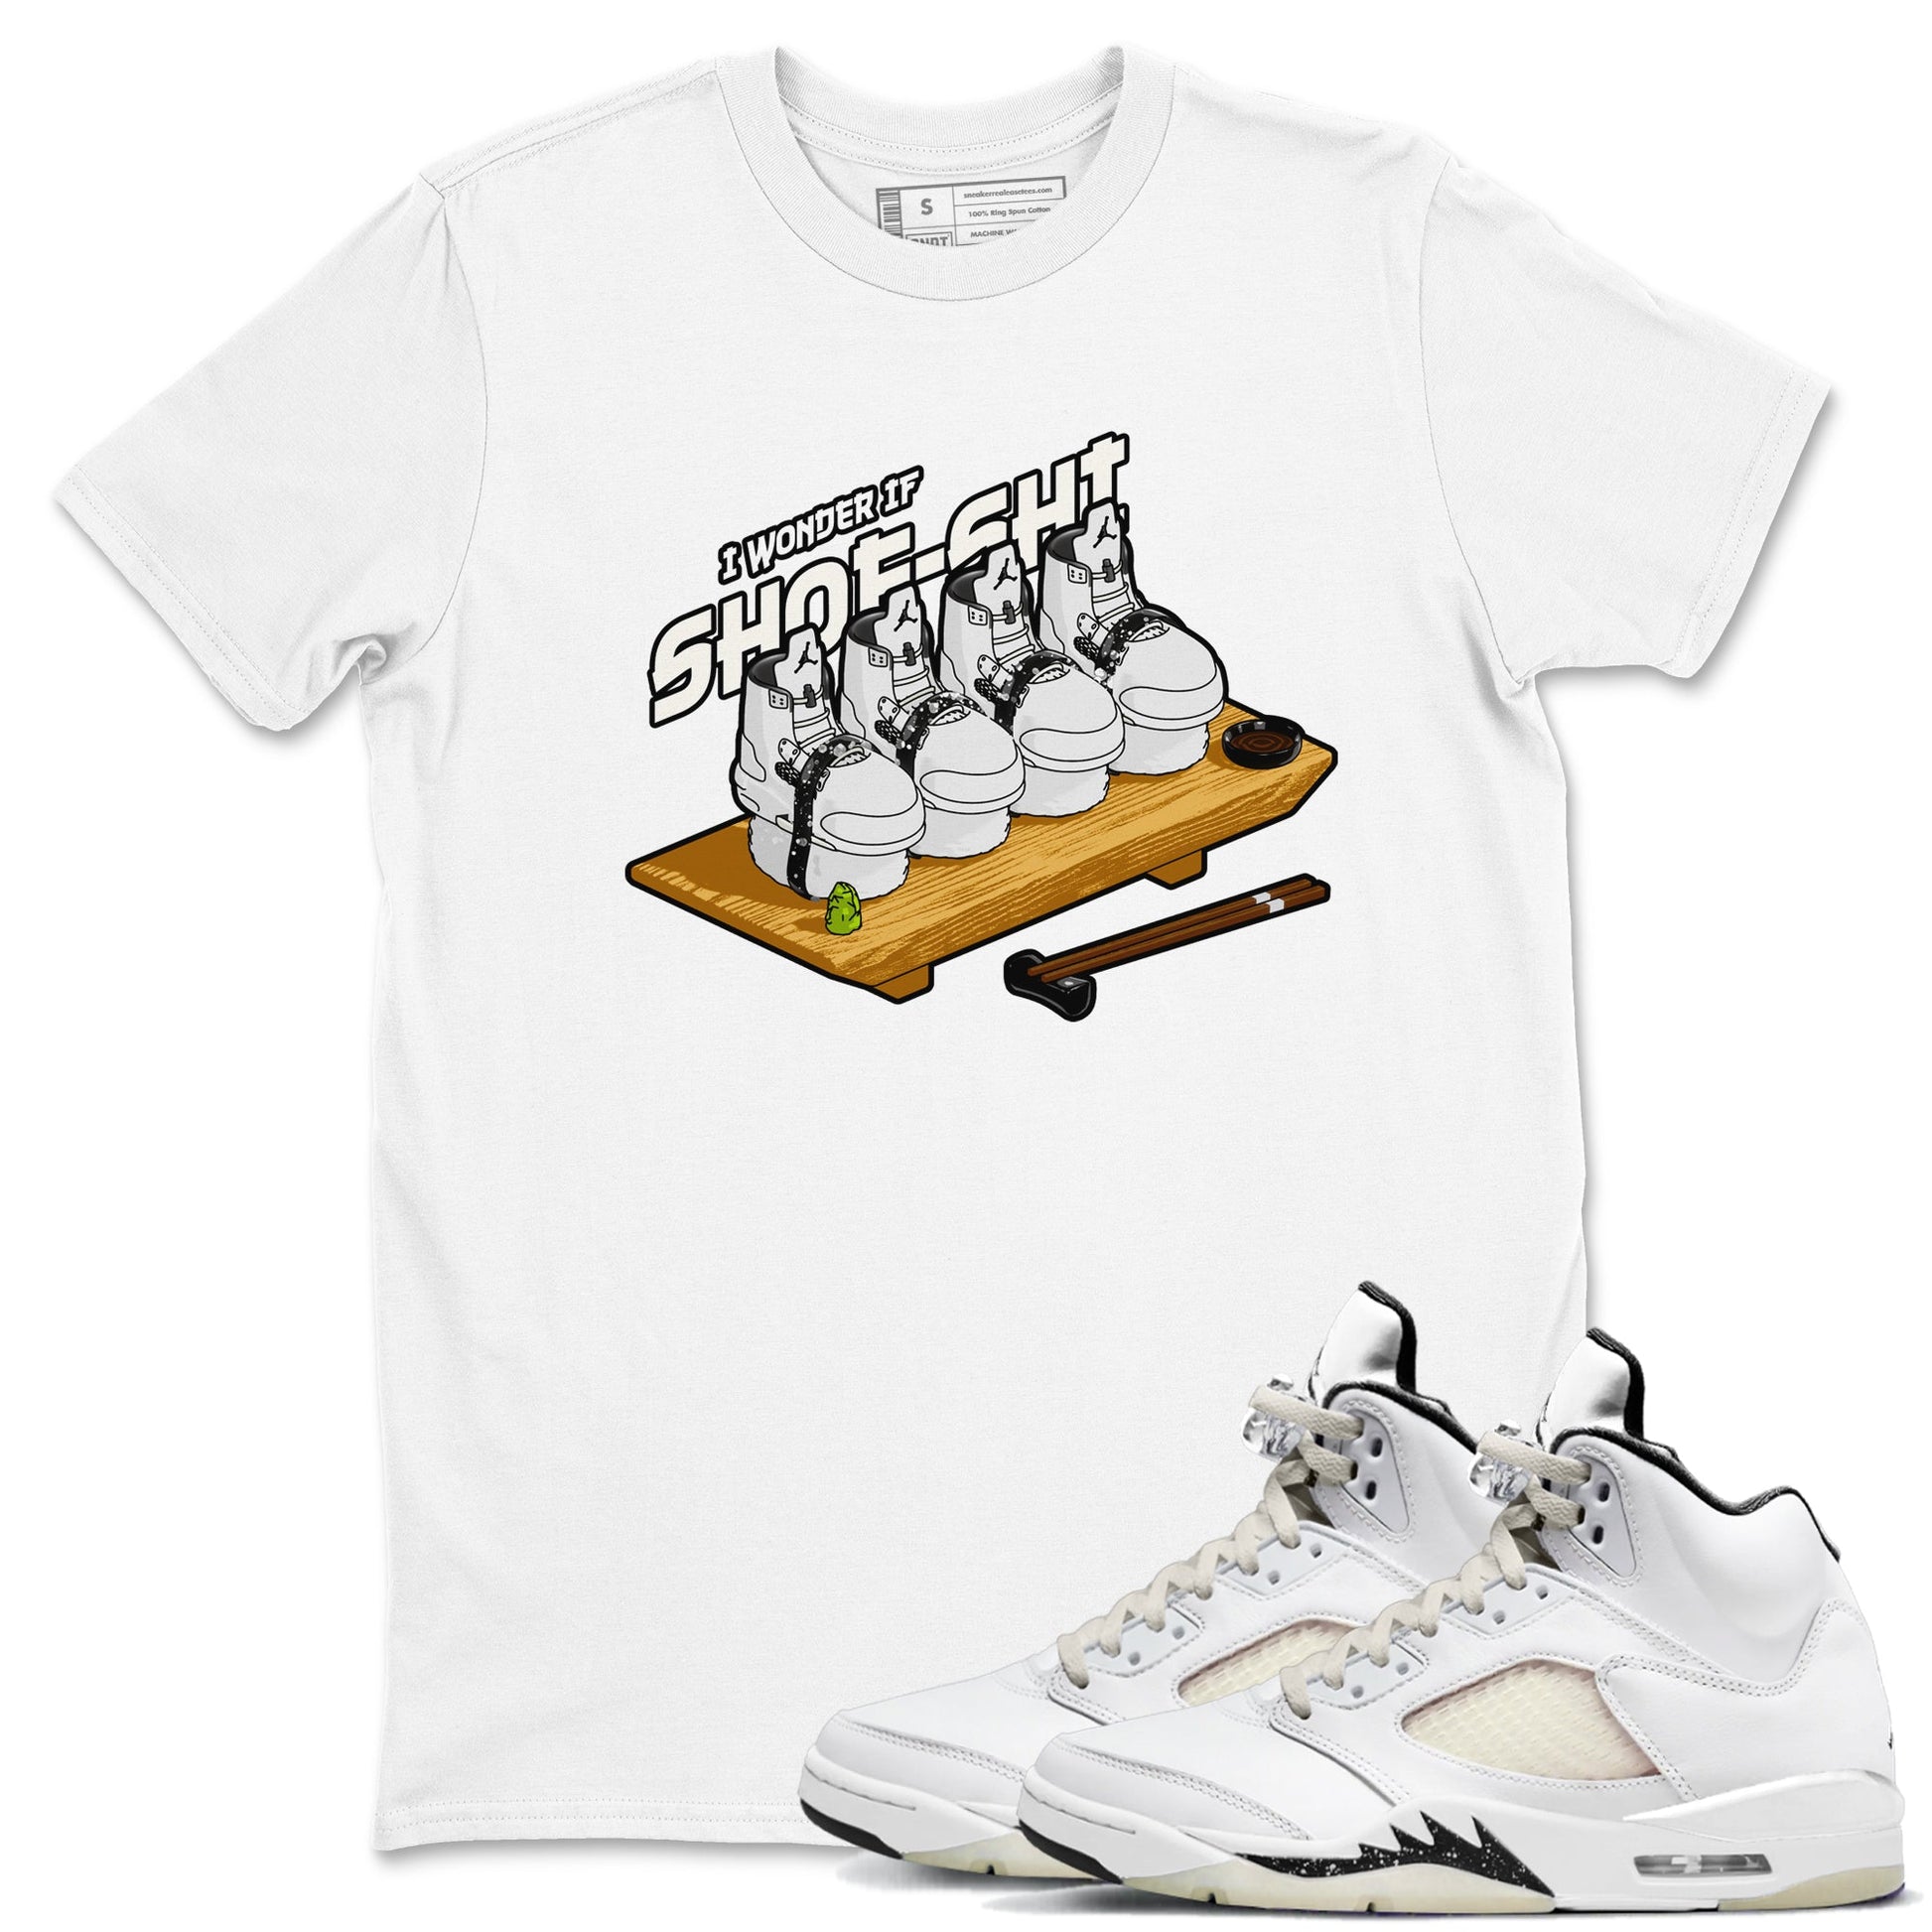 5s Sail shirt to match jordans Shoe-Shi sneaker tees Air Jordan 5 Sail SNRT Sneaker Release Tees unisex cotton White 1 crew neck shirt